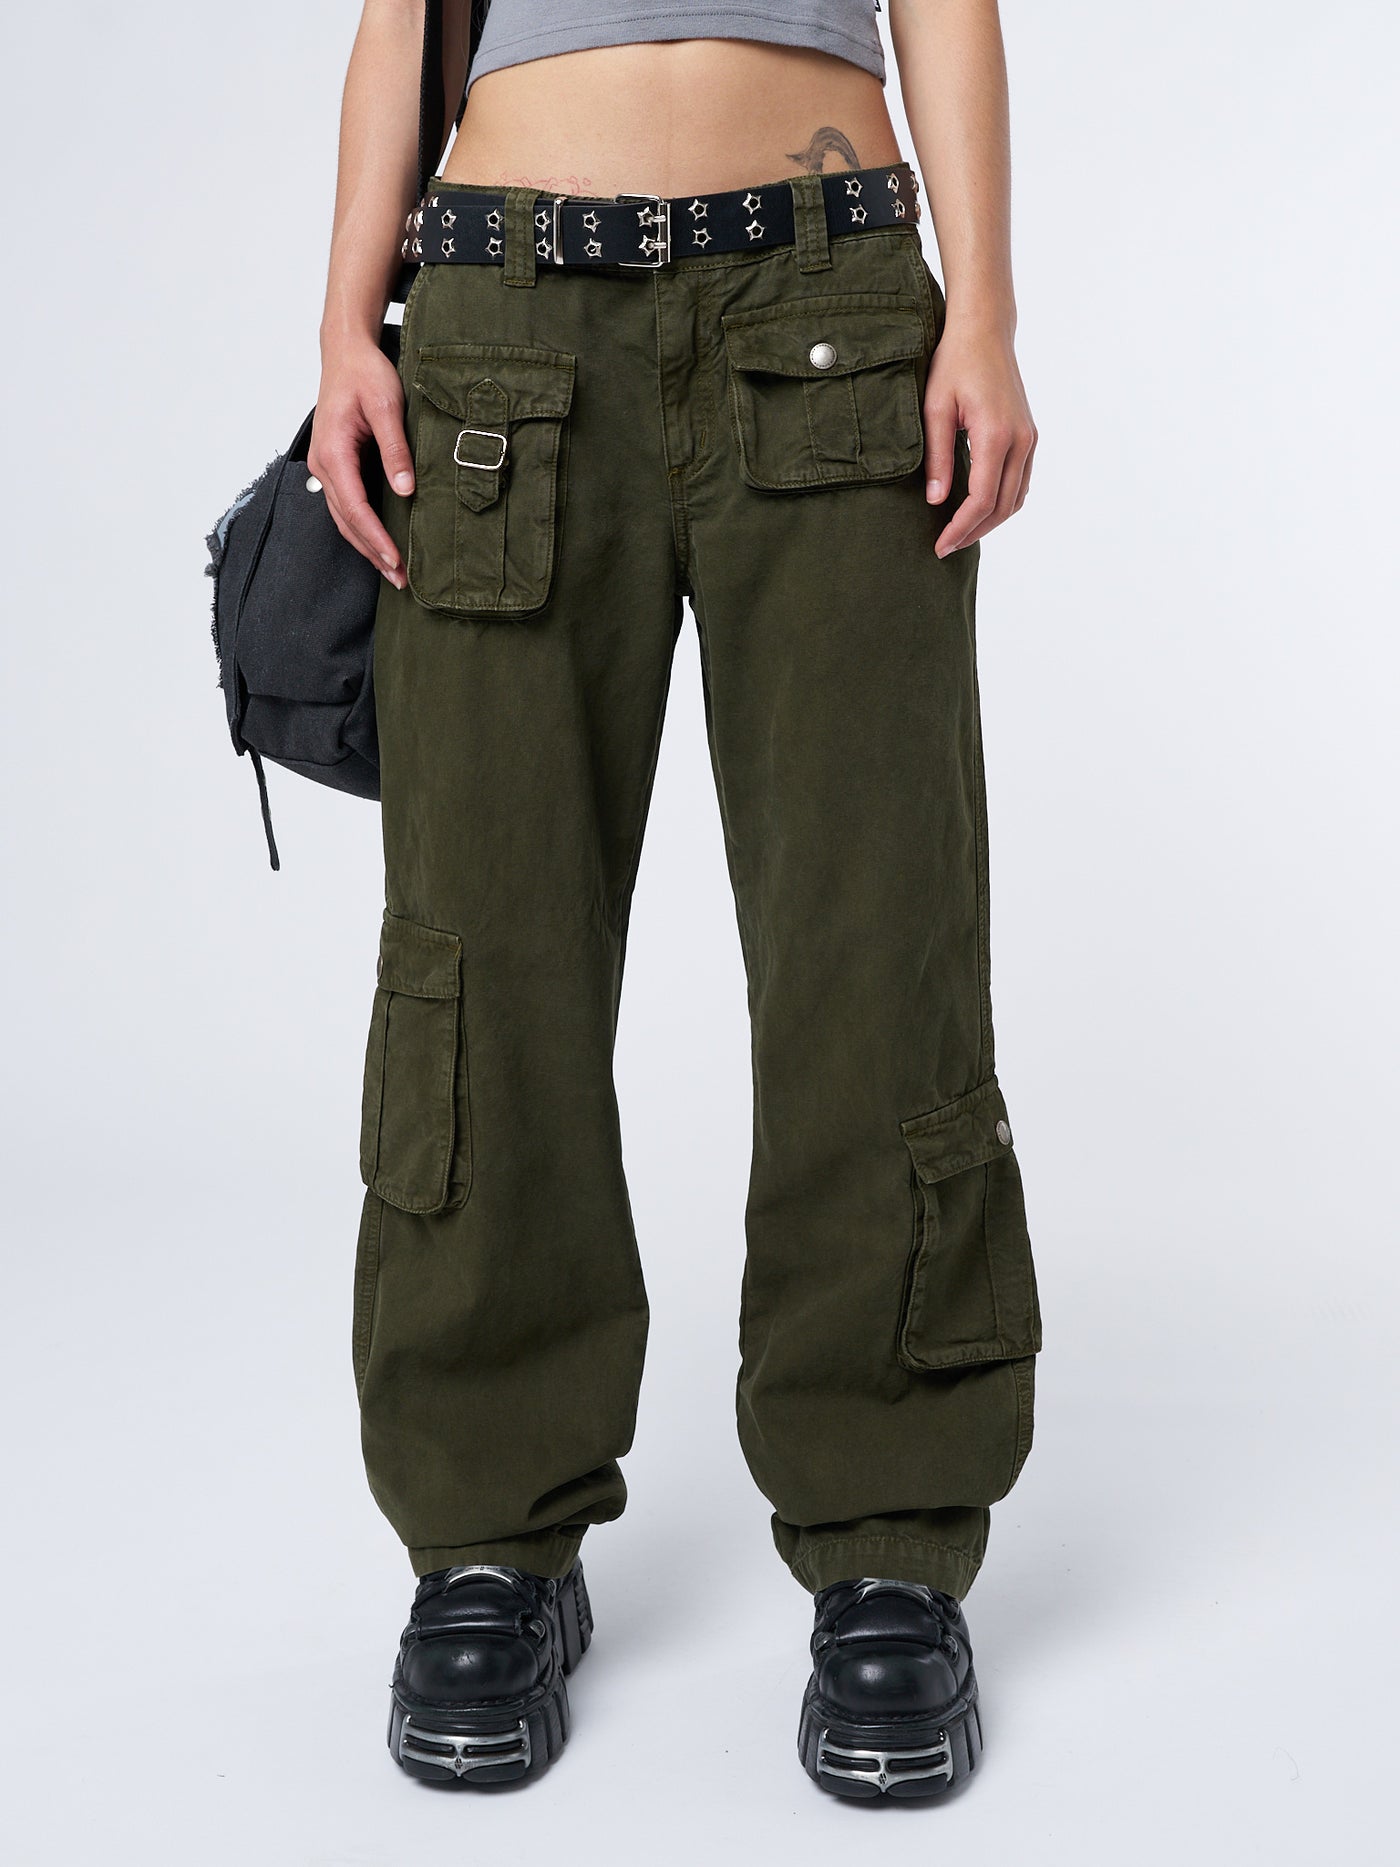 Trooper Green Multi Pocket Cargo Pants